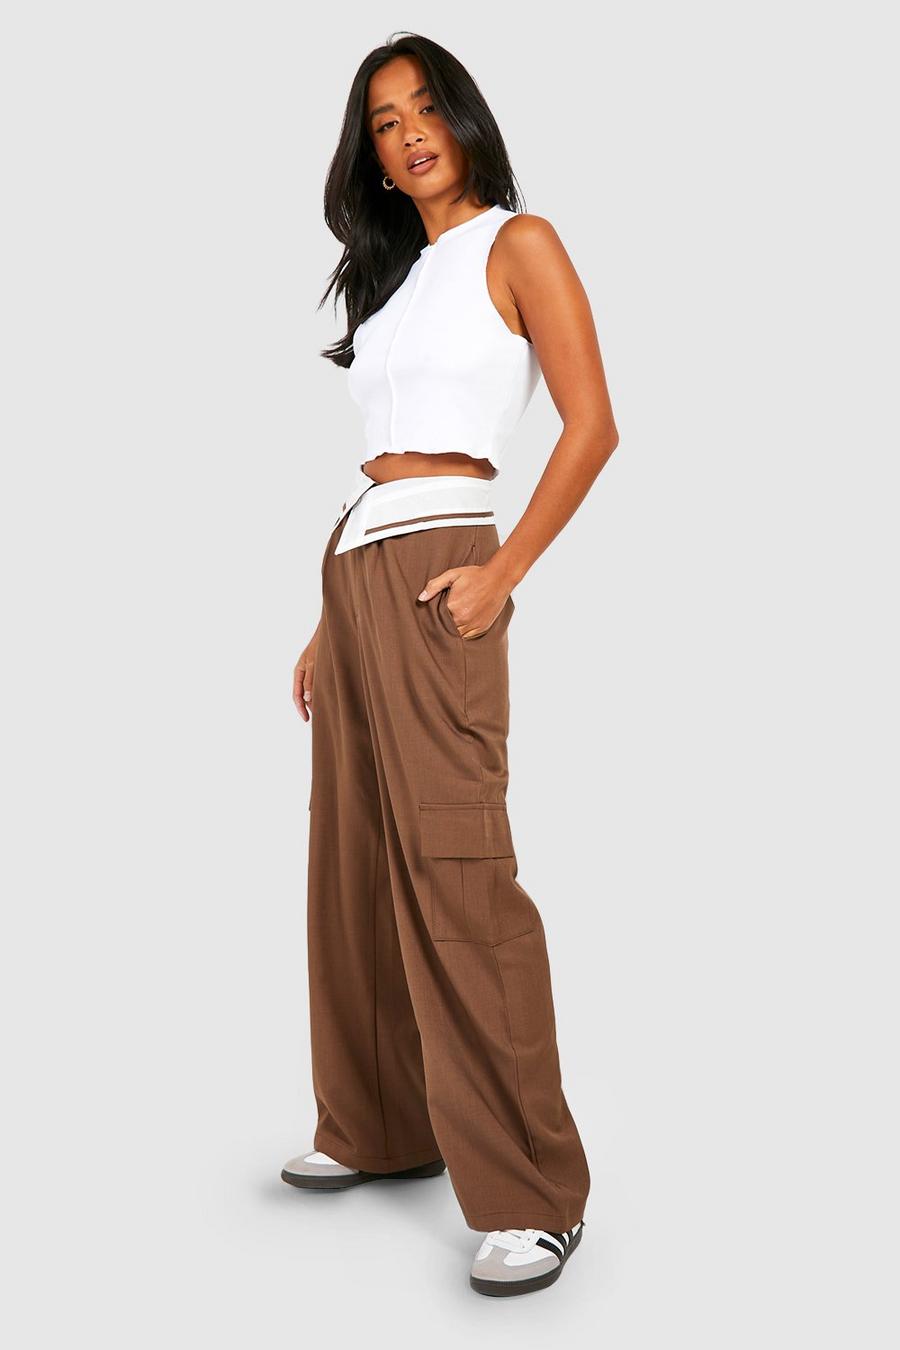 Petite Chocolate Brown Cargo Pants  Cargo pants outfit, Brown cargo pants  outfit women, Brown outfit